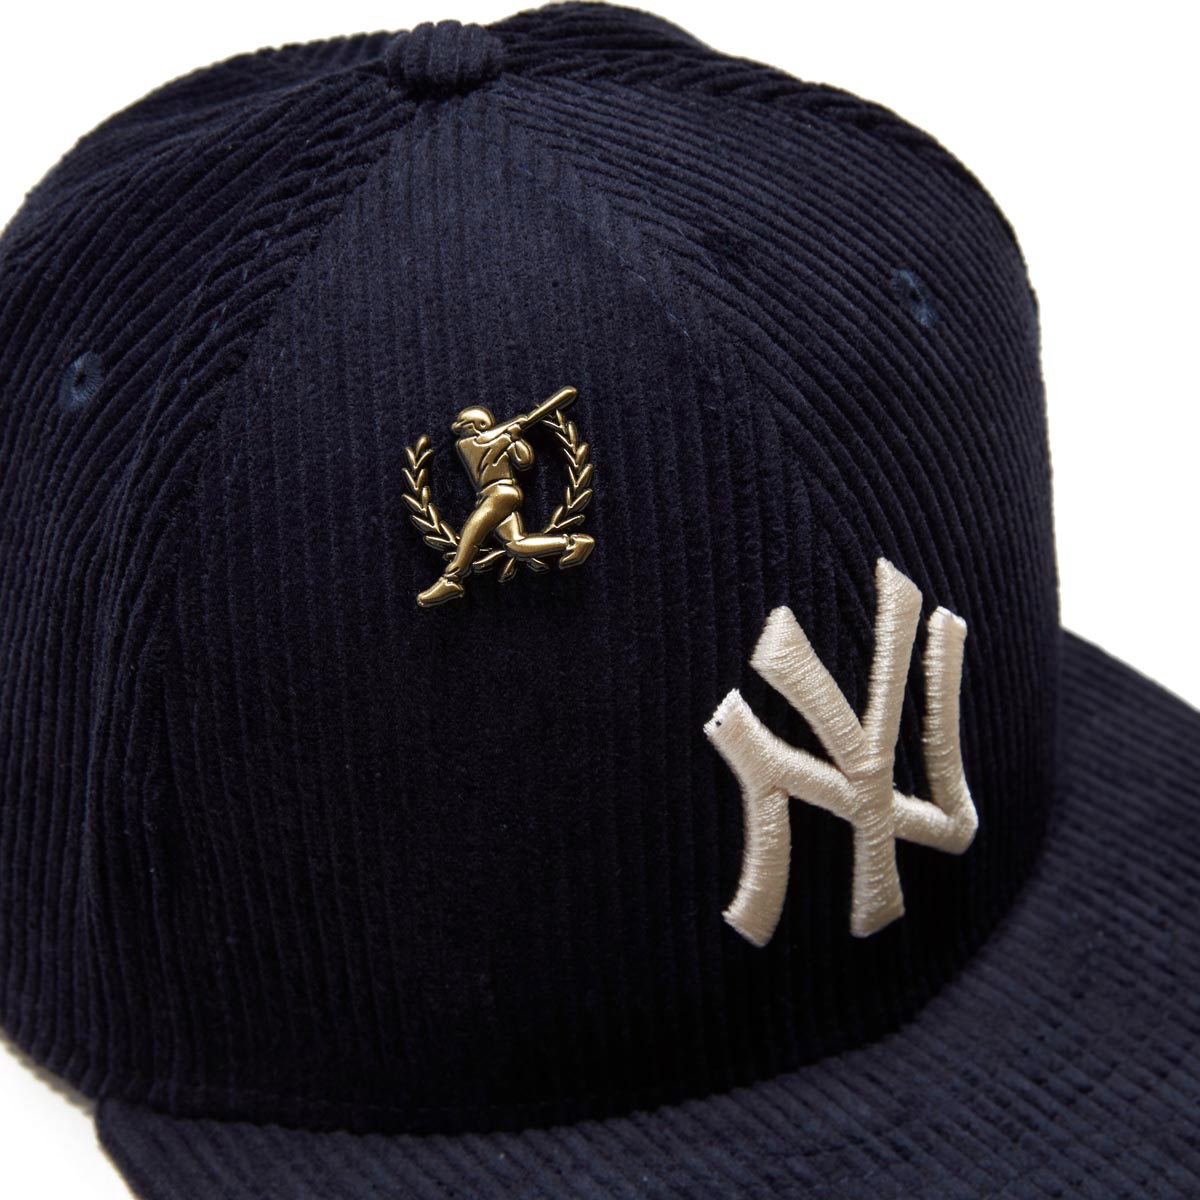 New Era 5950 Letterman Pin Hat - New York Yankees image 3